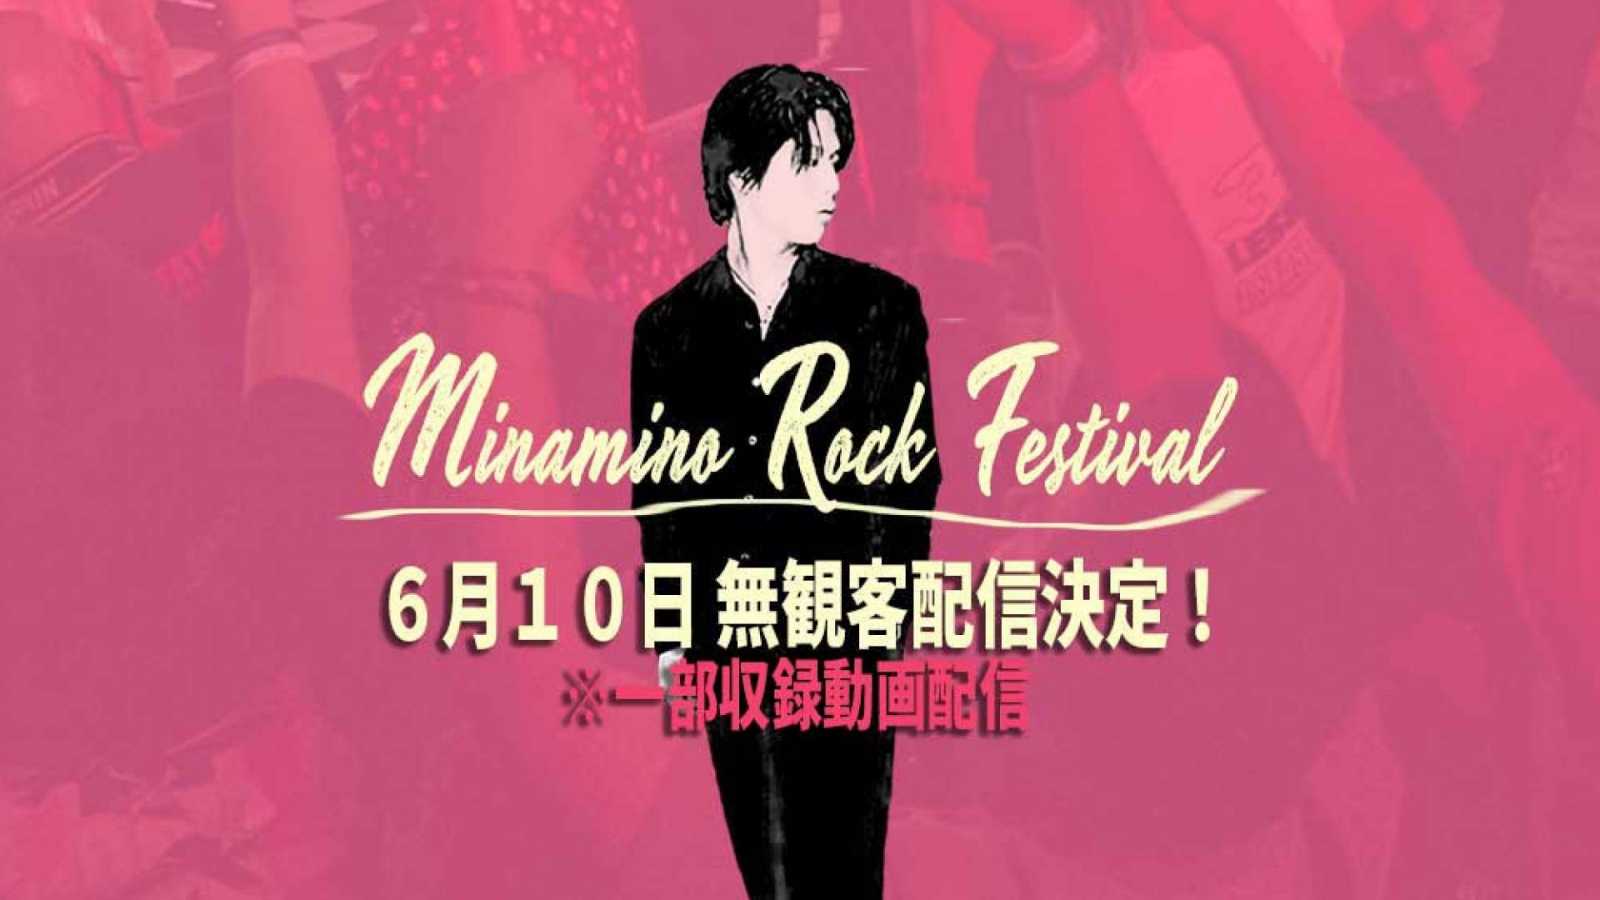 Minamino Rock Festival 2020 będzie można oglądać na całym świecie © Minamino Rock Festival. All rights reserved.